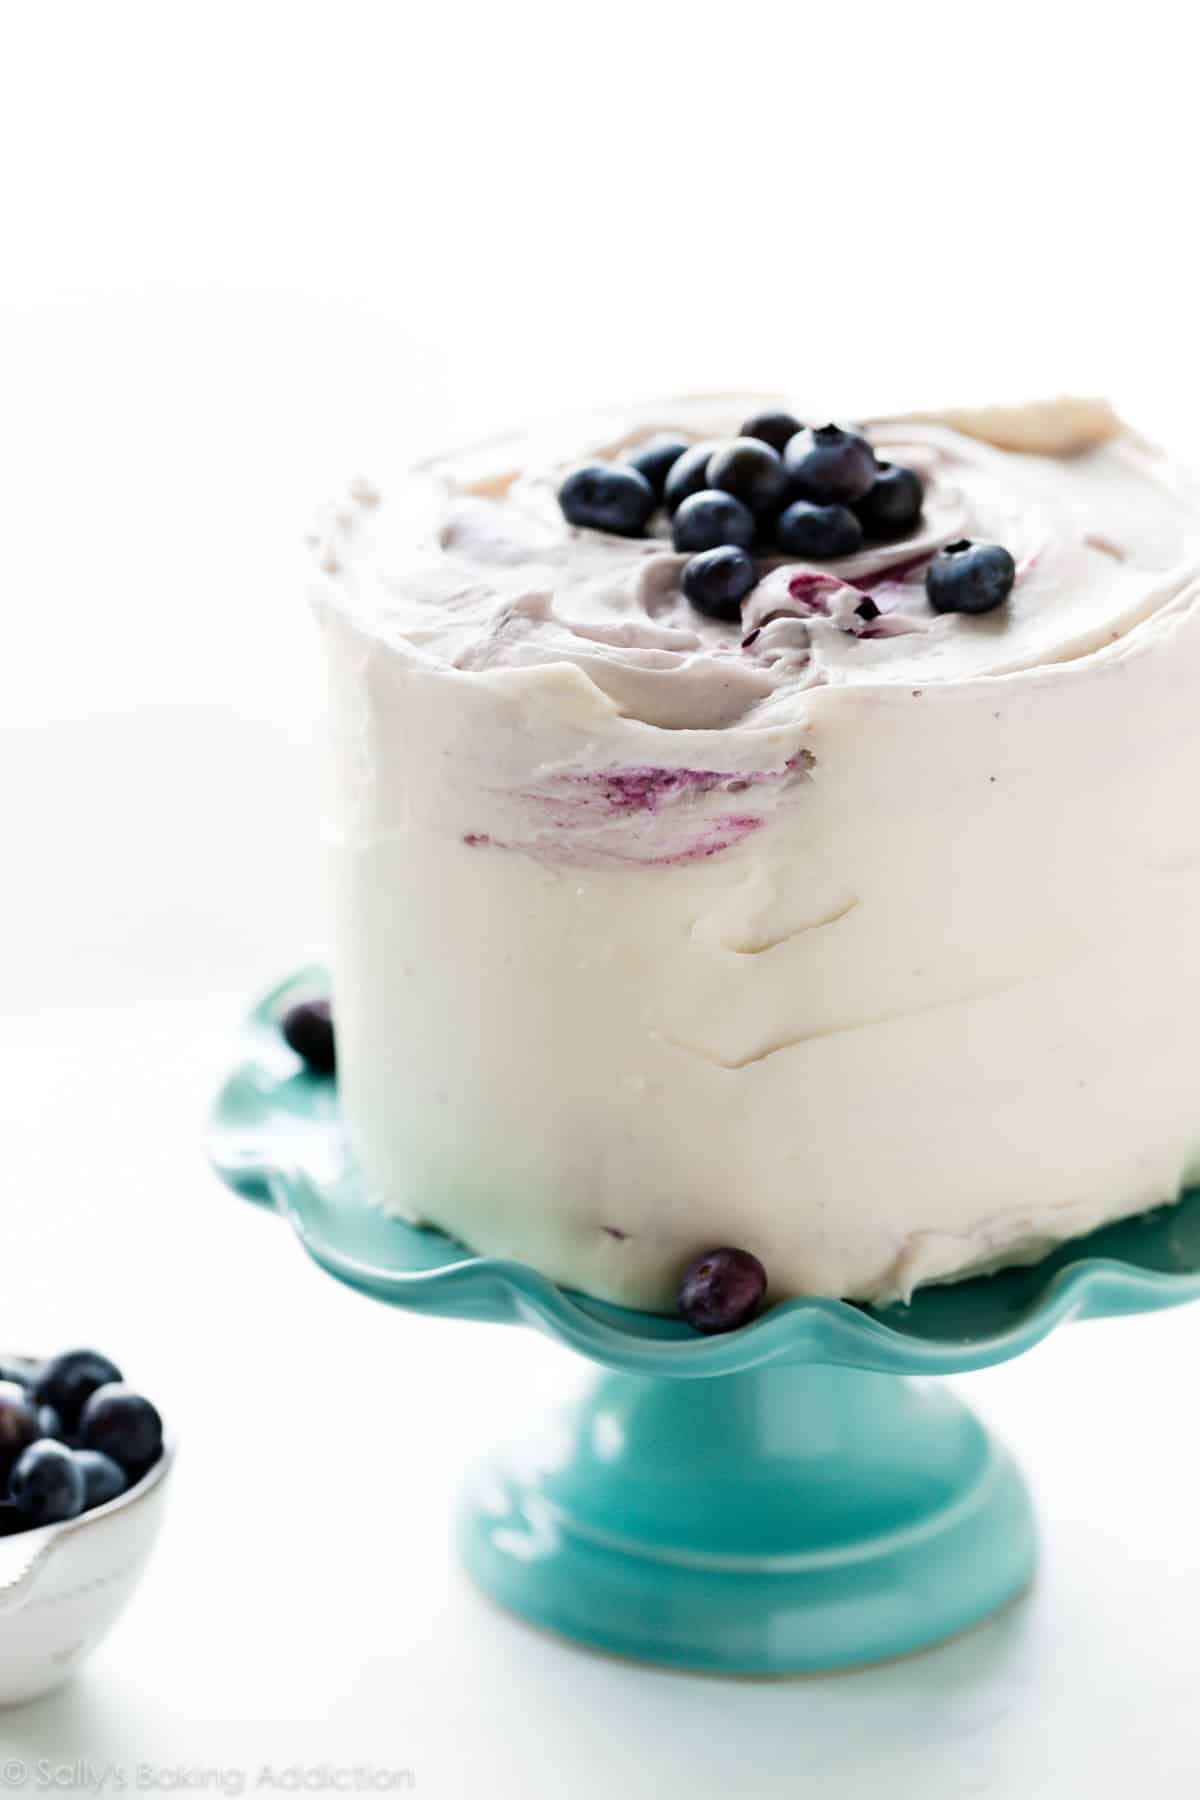 vanilla sponge vertical cake with lemon blueberry whipped cream on teal cake stand